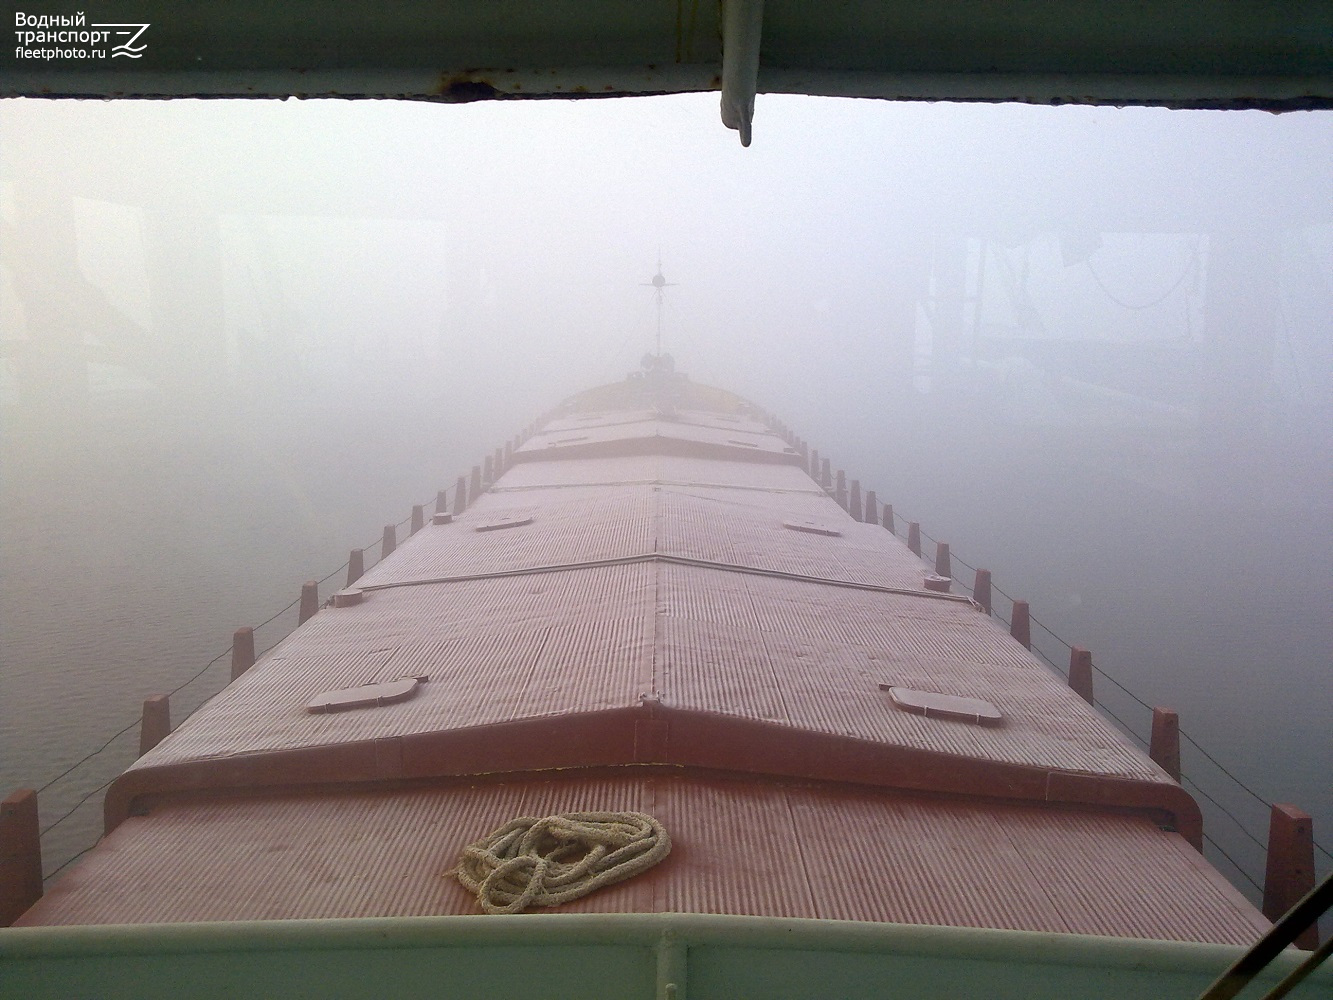 СТ-762. View from wheelhouses and bridge wings, Deck views